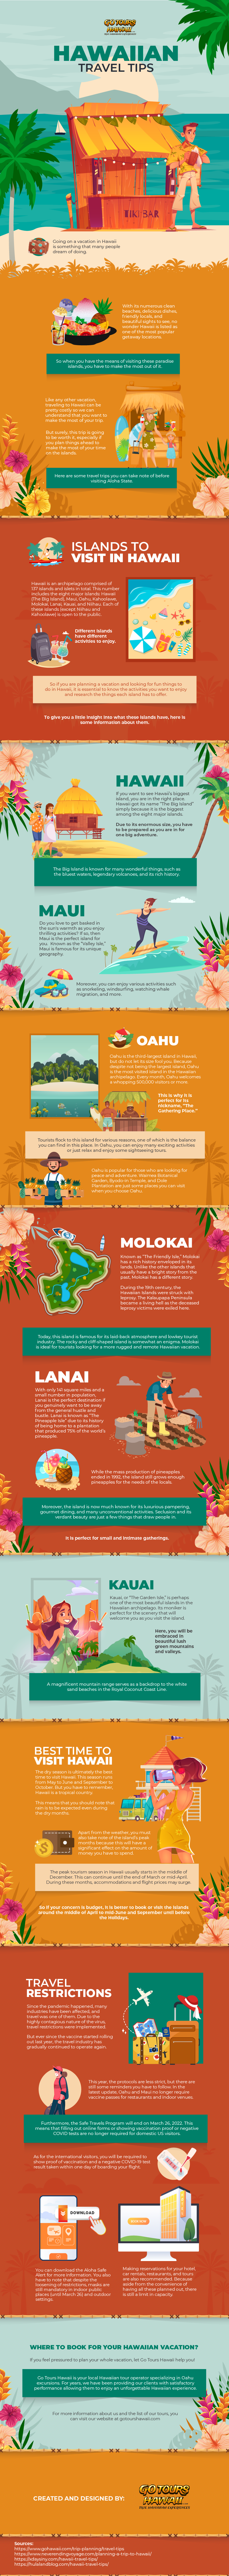 Hawaiian Travel Tips - Infographic ImageFE51FQ#ET